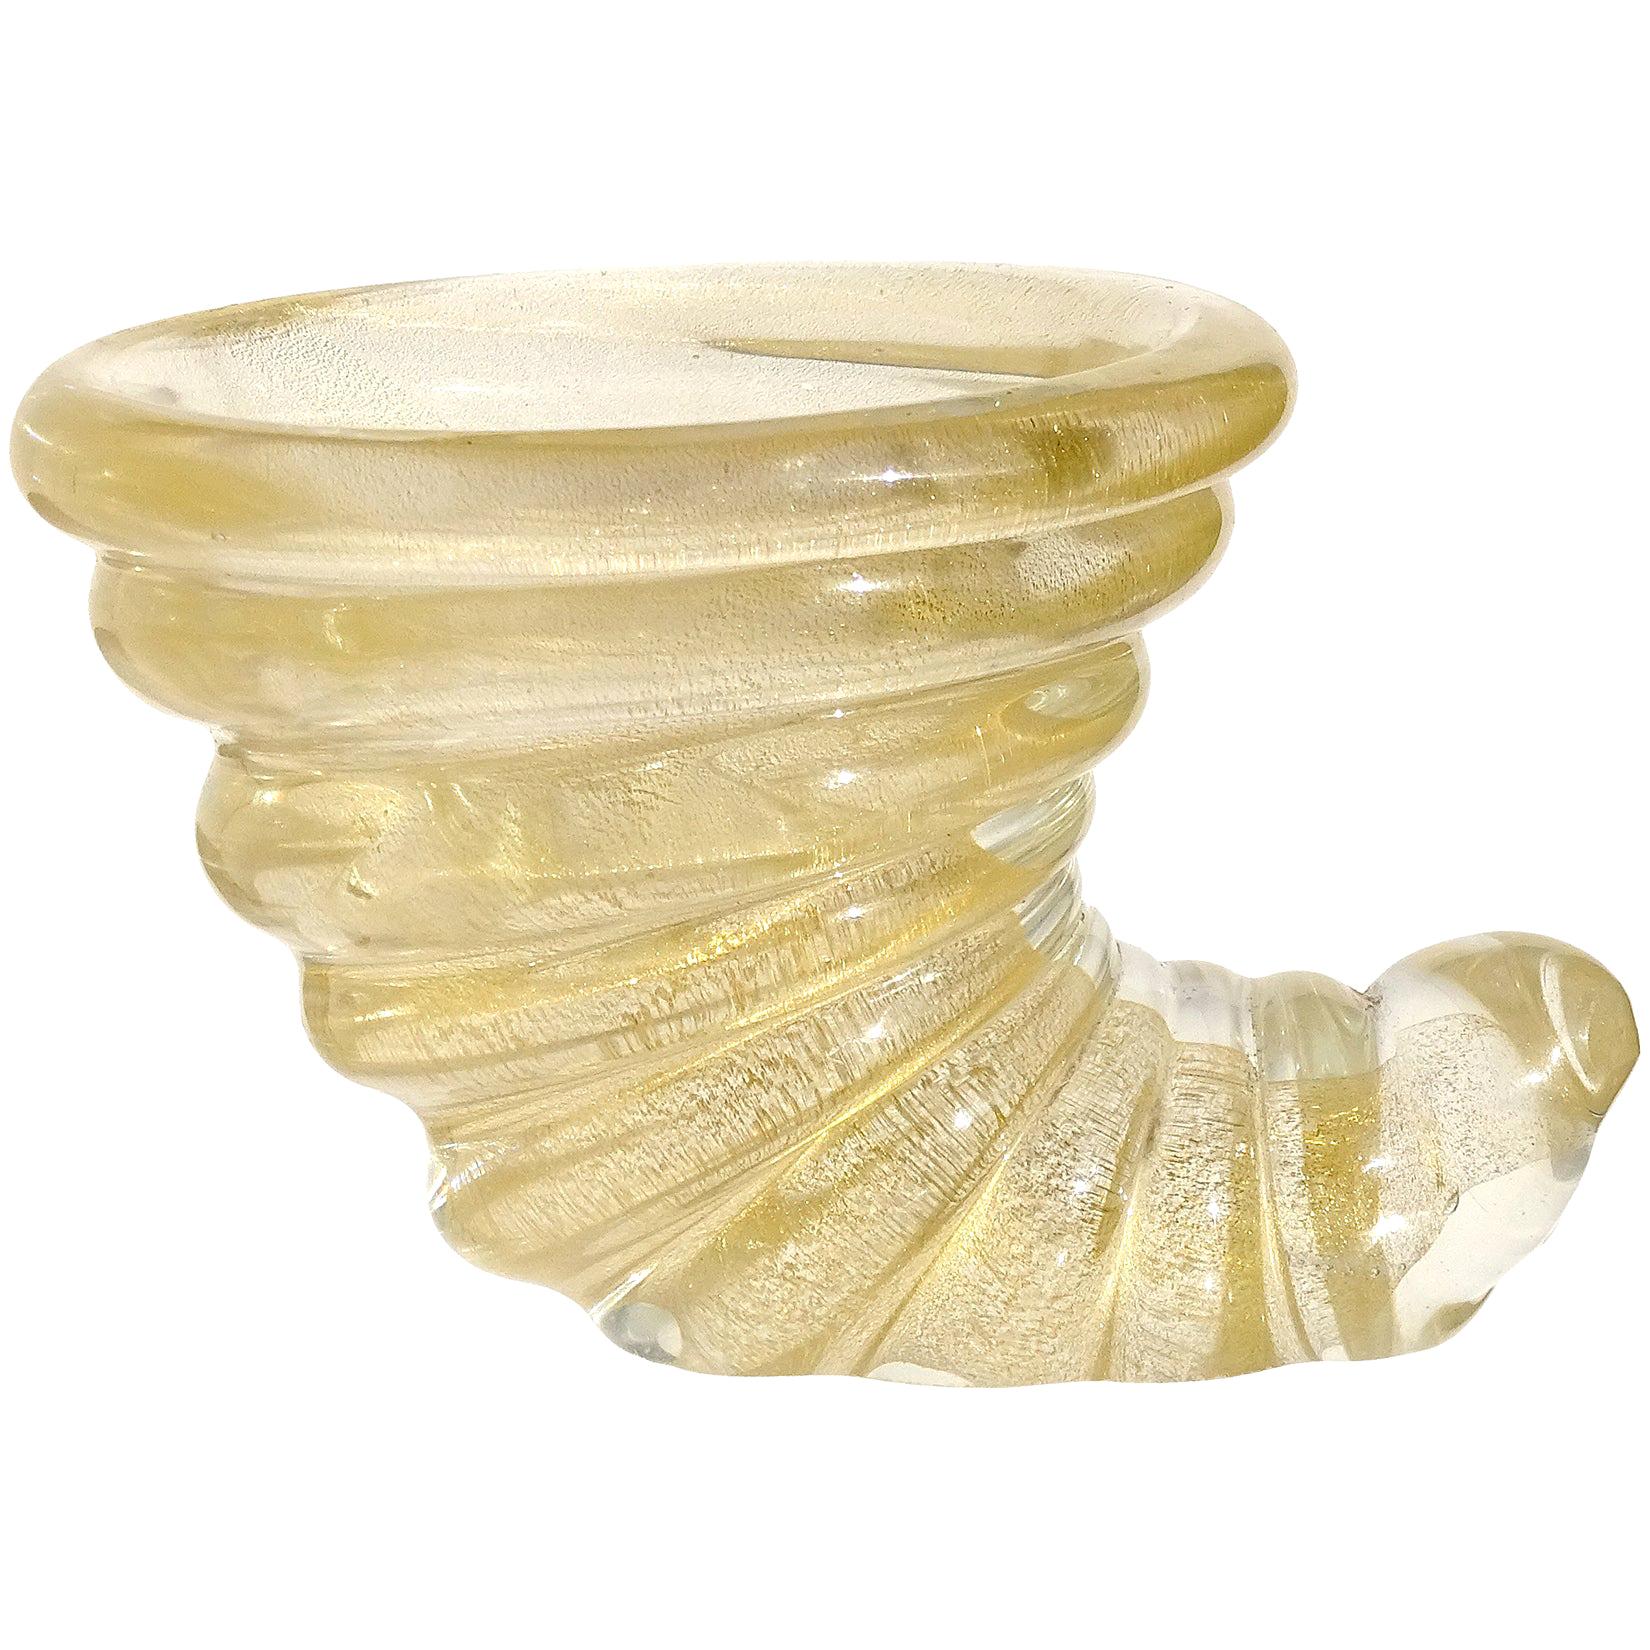 Sculptures repose-plat en verre d'art italien de Murano en forme de coquillage avec mouchetures d'or de Barovier Toso